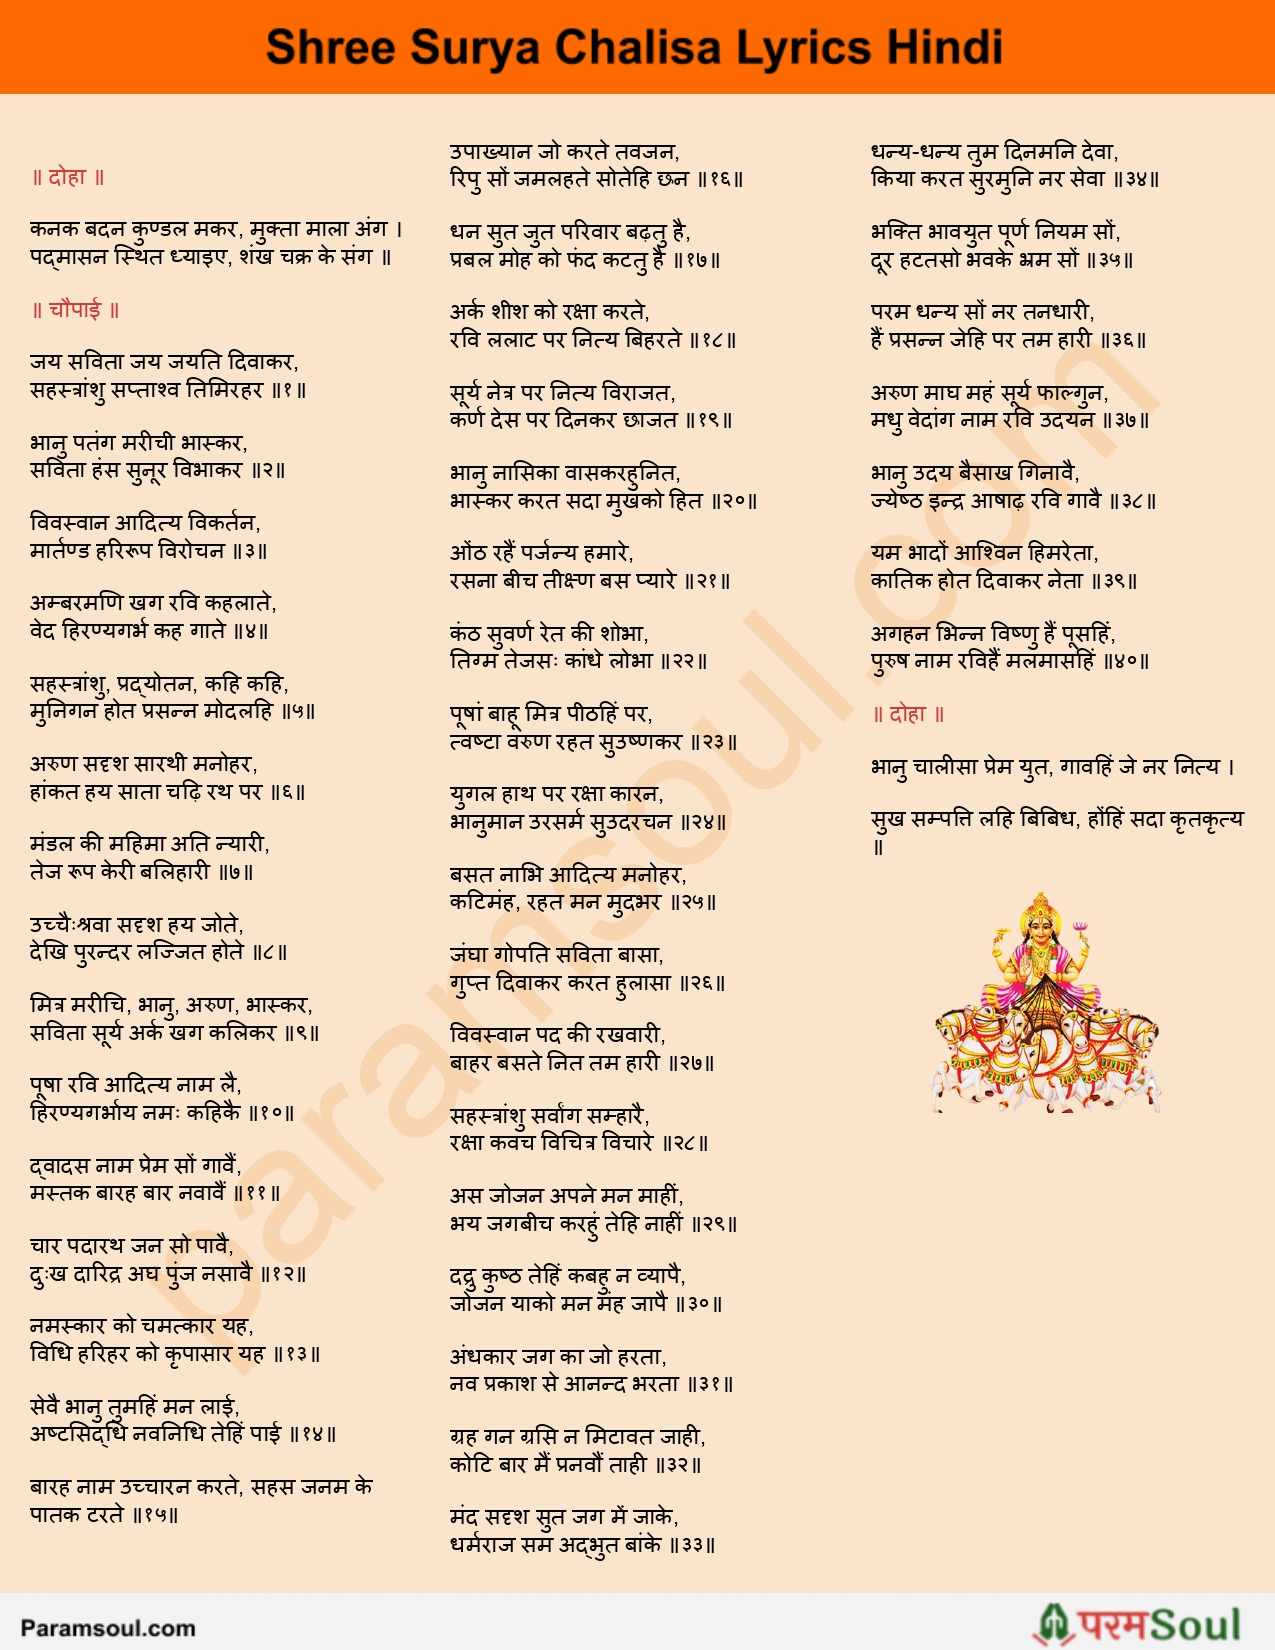 Surya Chalisa Lyrics in Hindi